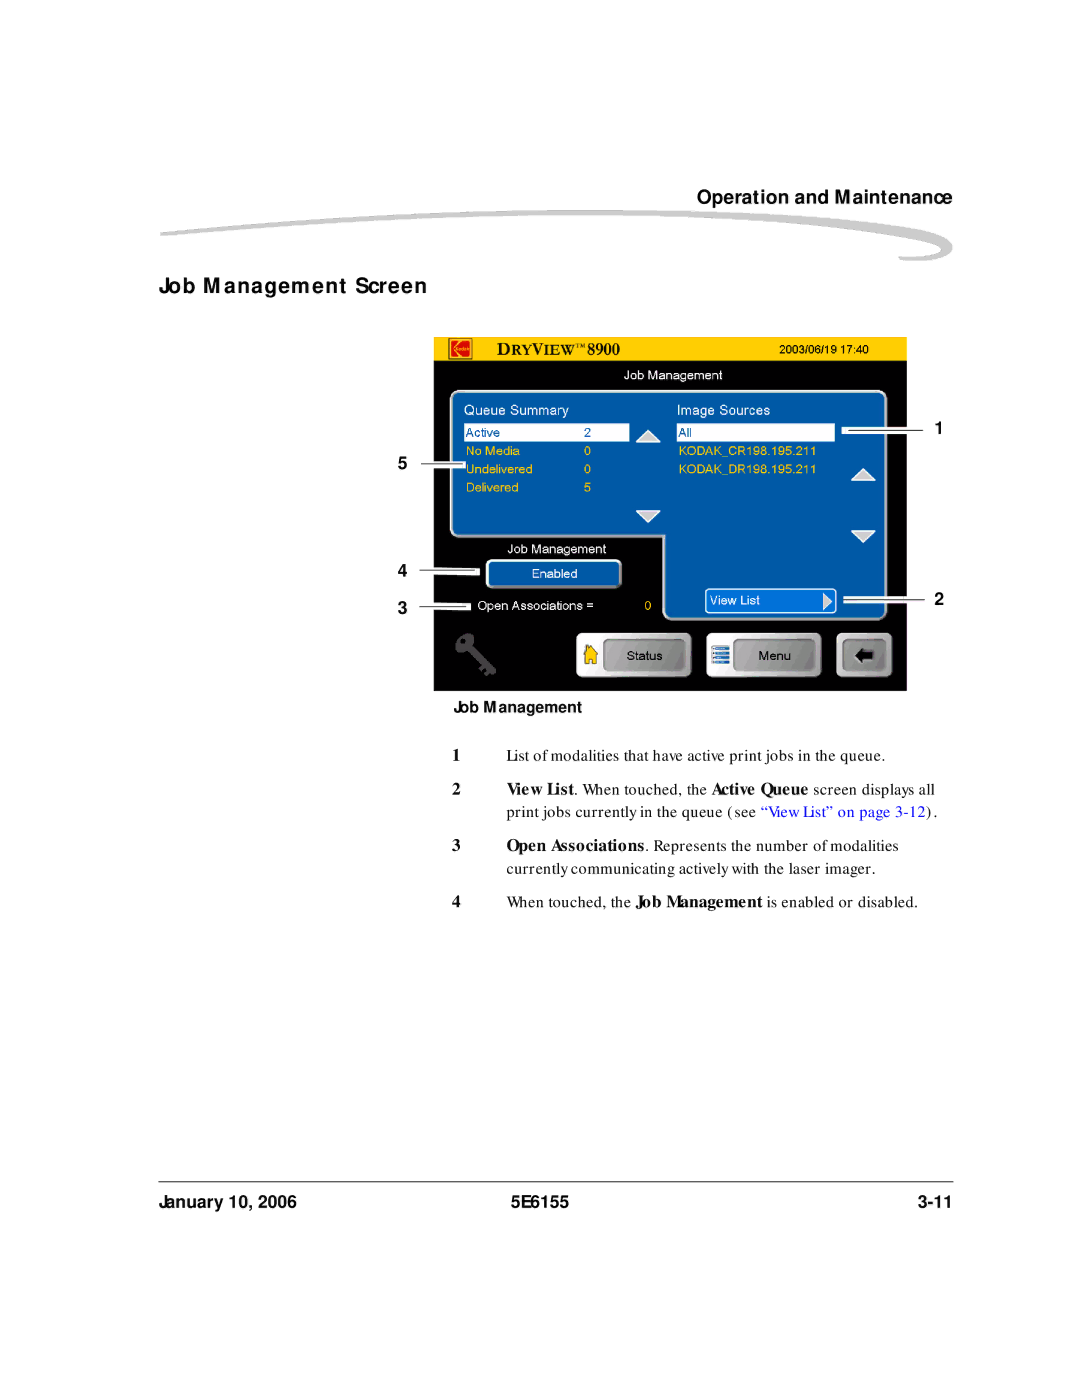 Kodak DryView 8900 manual Job Management Screen, List of modalities that have active print jobs in the queue 